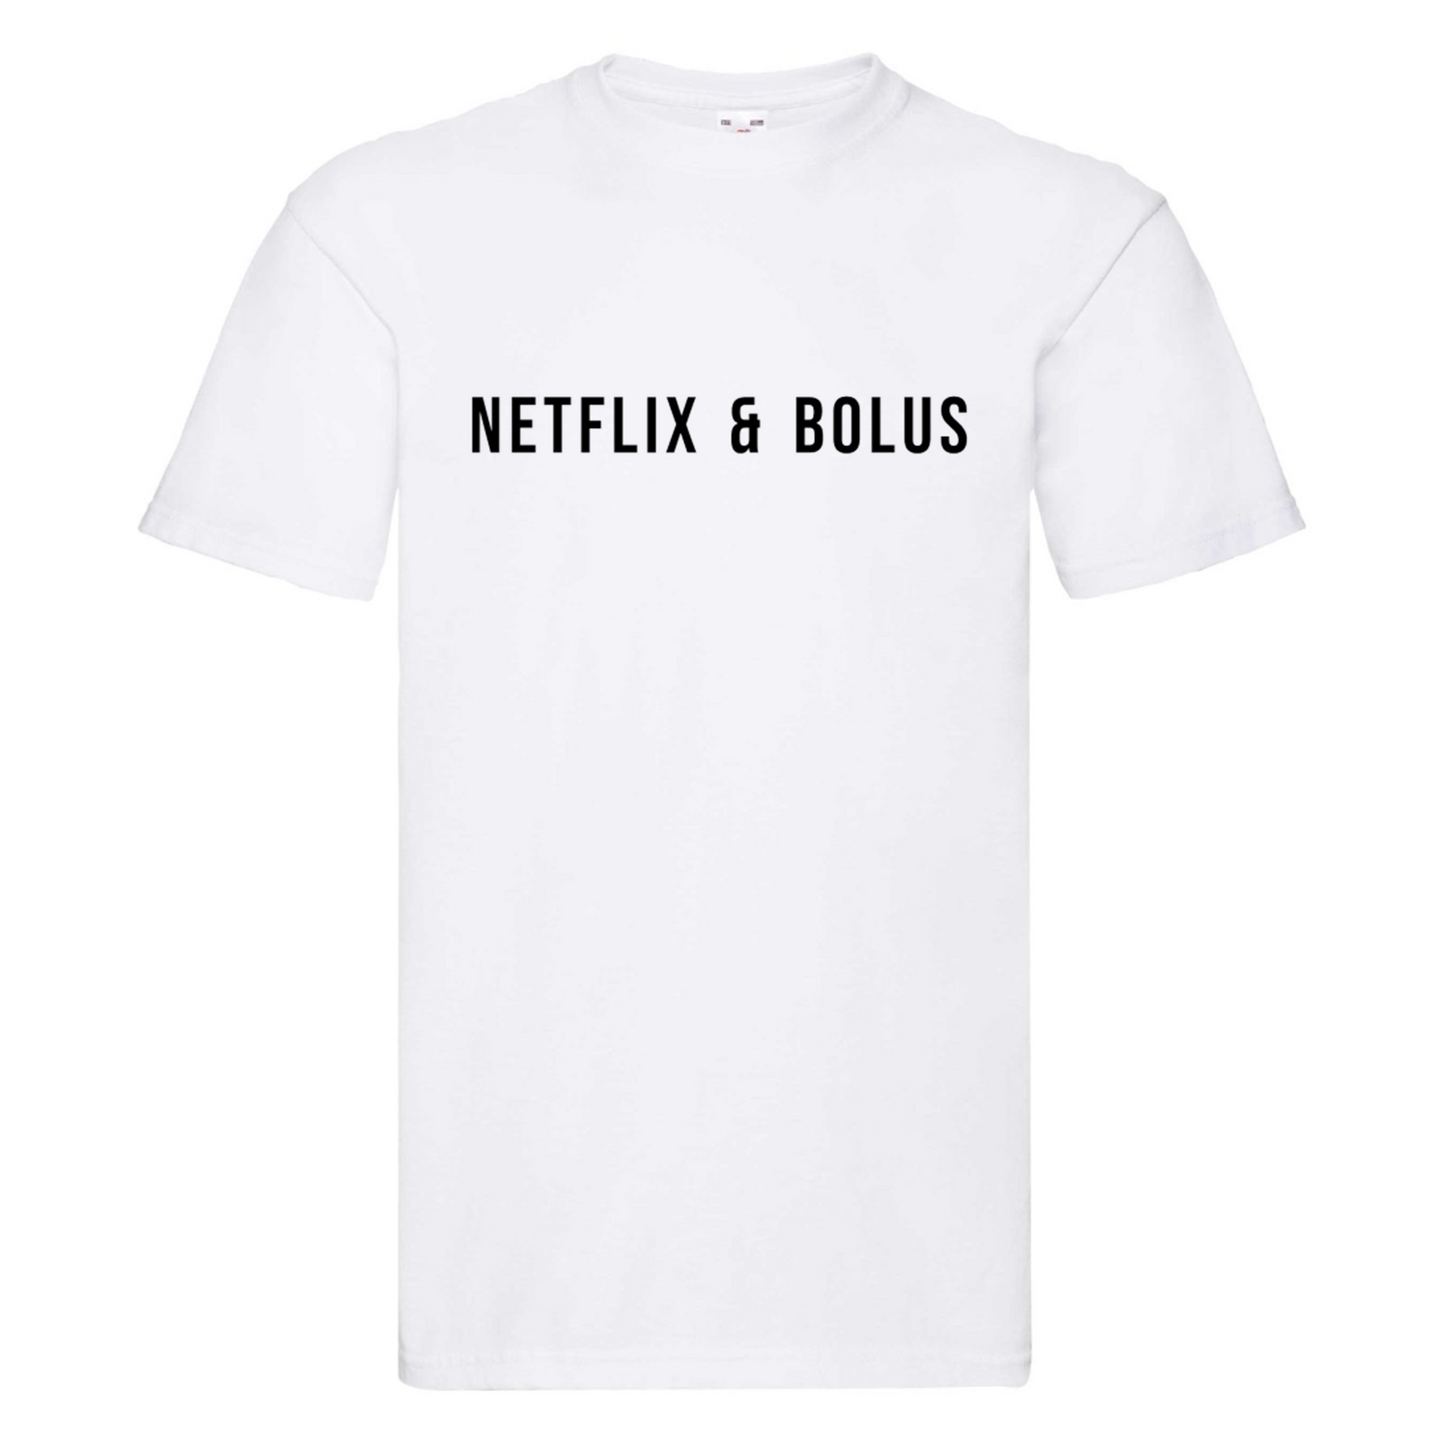 Netflix & Bolus T Shirt